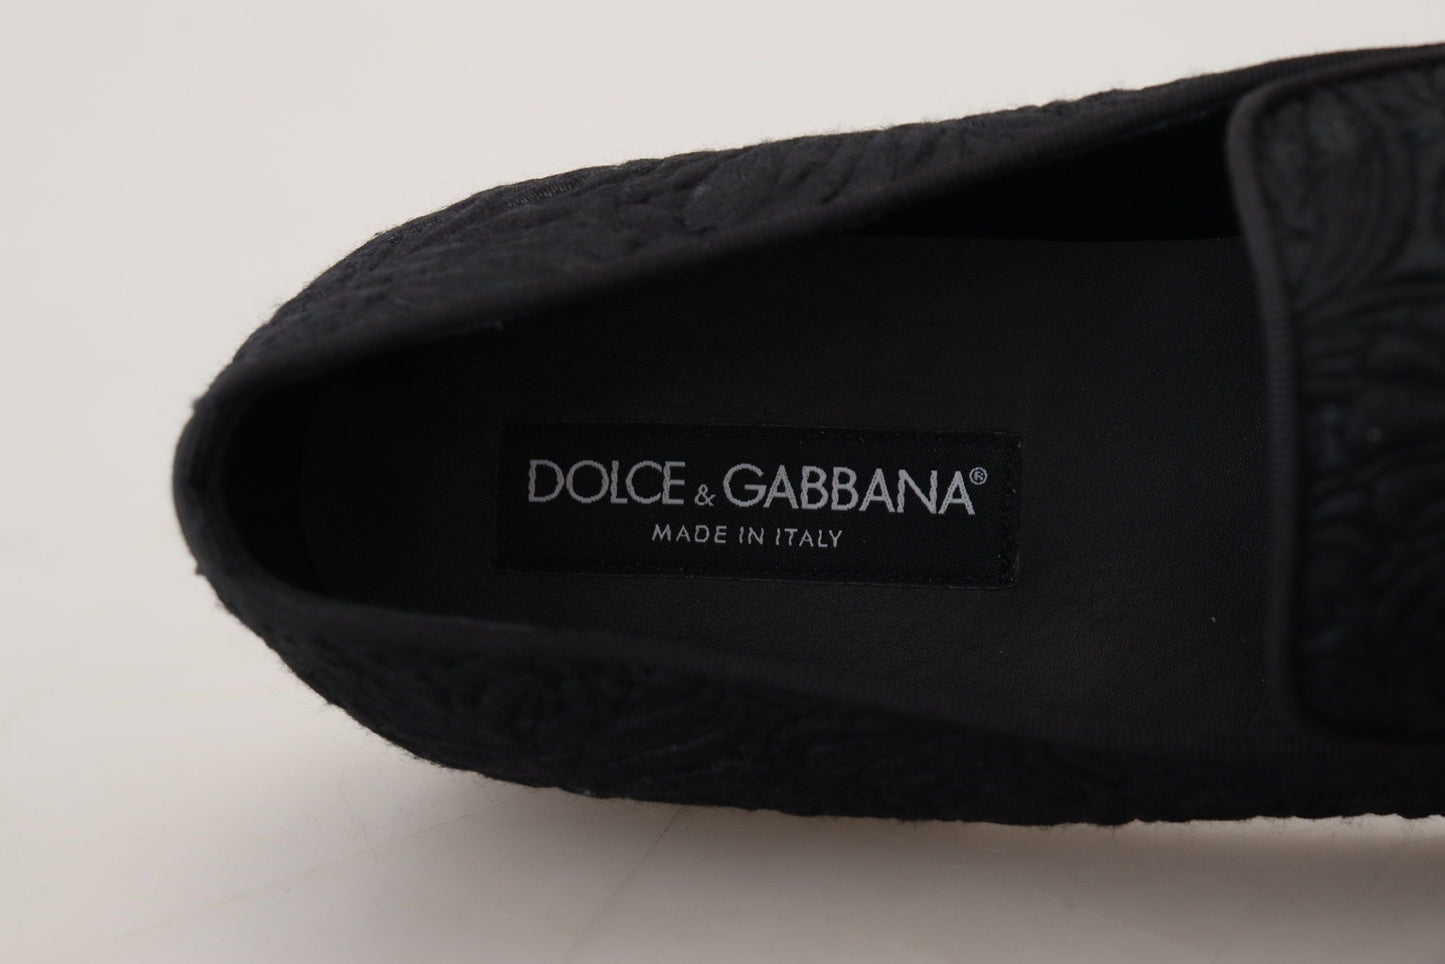 Dolce & Gabbana Black Floral Jacquard Slippers Loafers Shoes | Fashionsarah.com